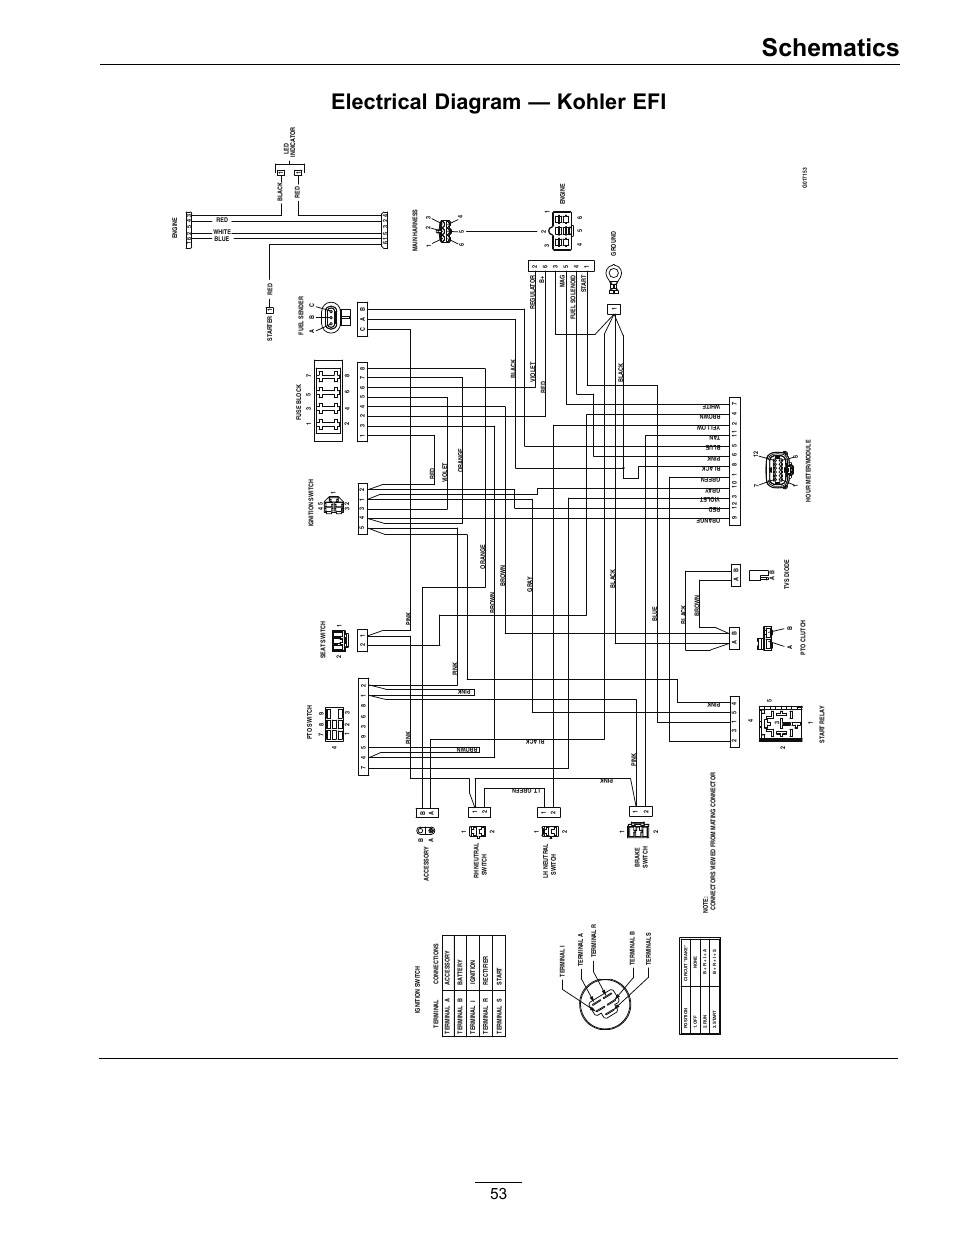 Wire Schematic Lazer Z Lz20kc524 Wiring Diagram Exmark Lazer Z Of Wire Schematic Lazer Z Lz20kc524